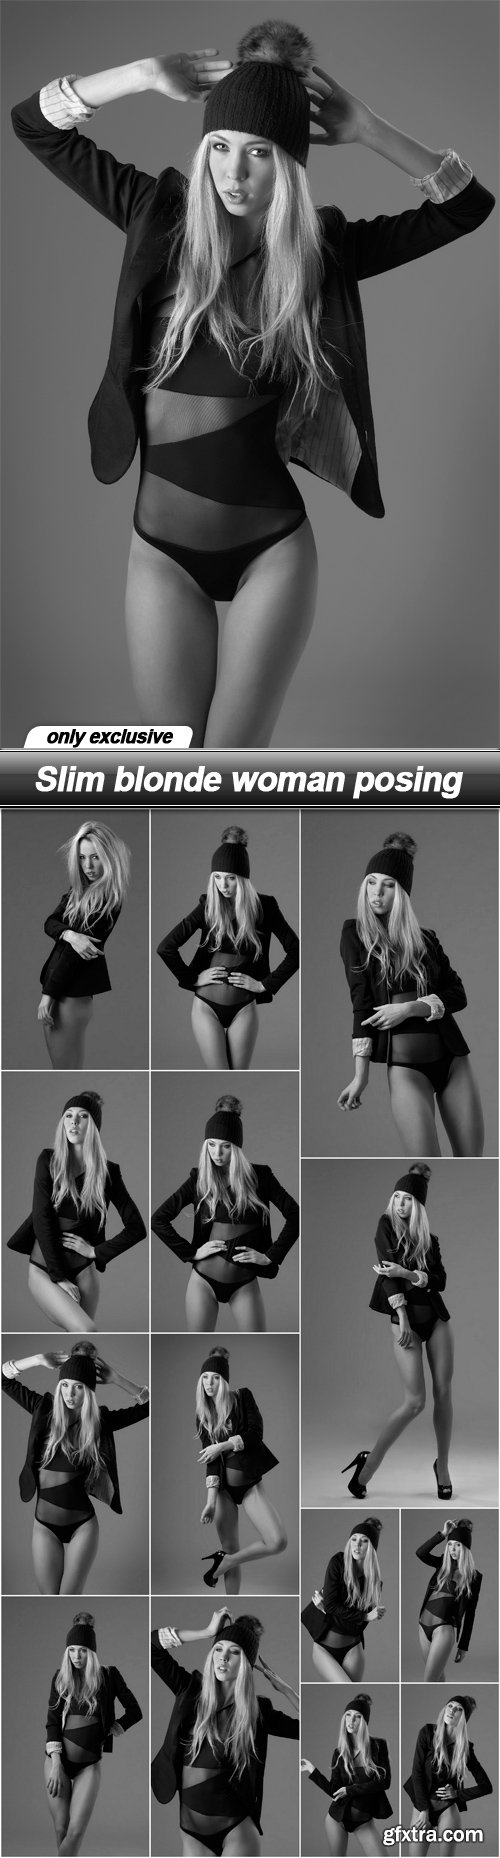 Slim blonde woman posing - 14 UHQ JPEG